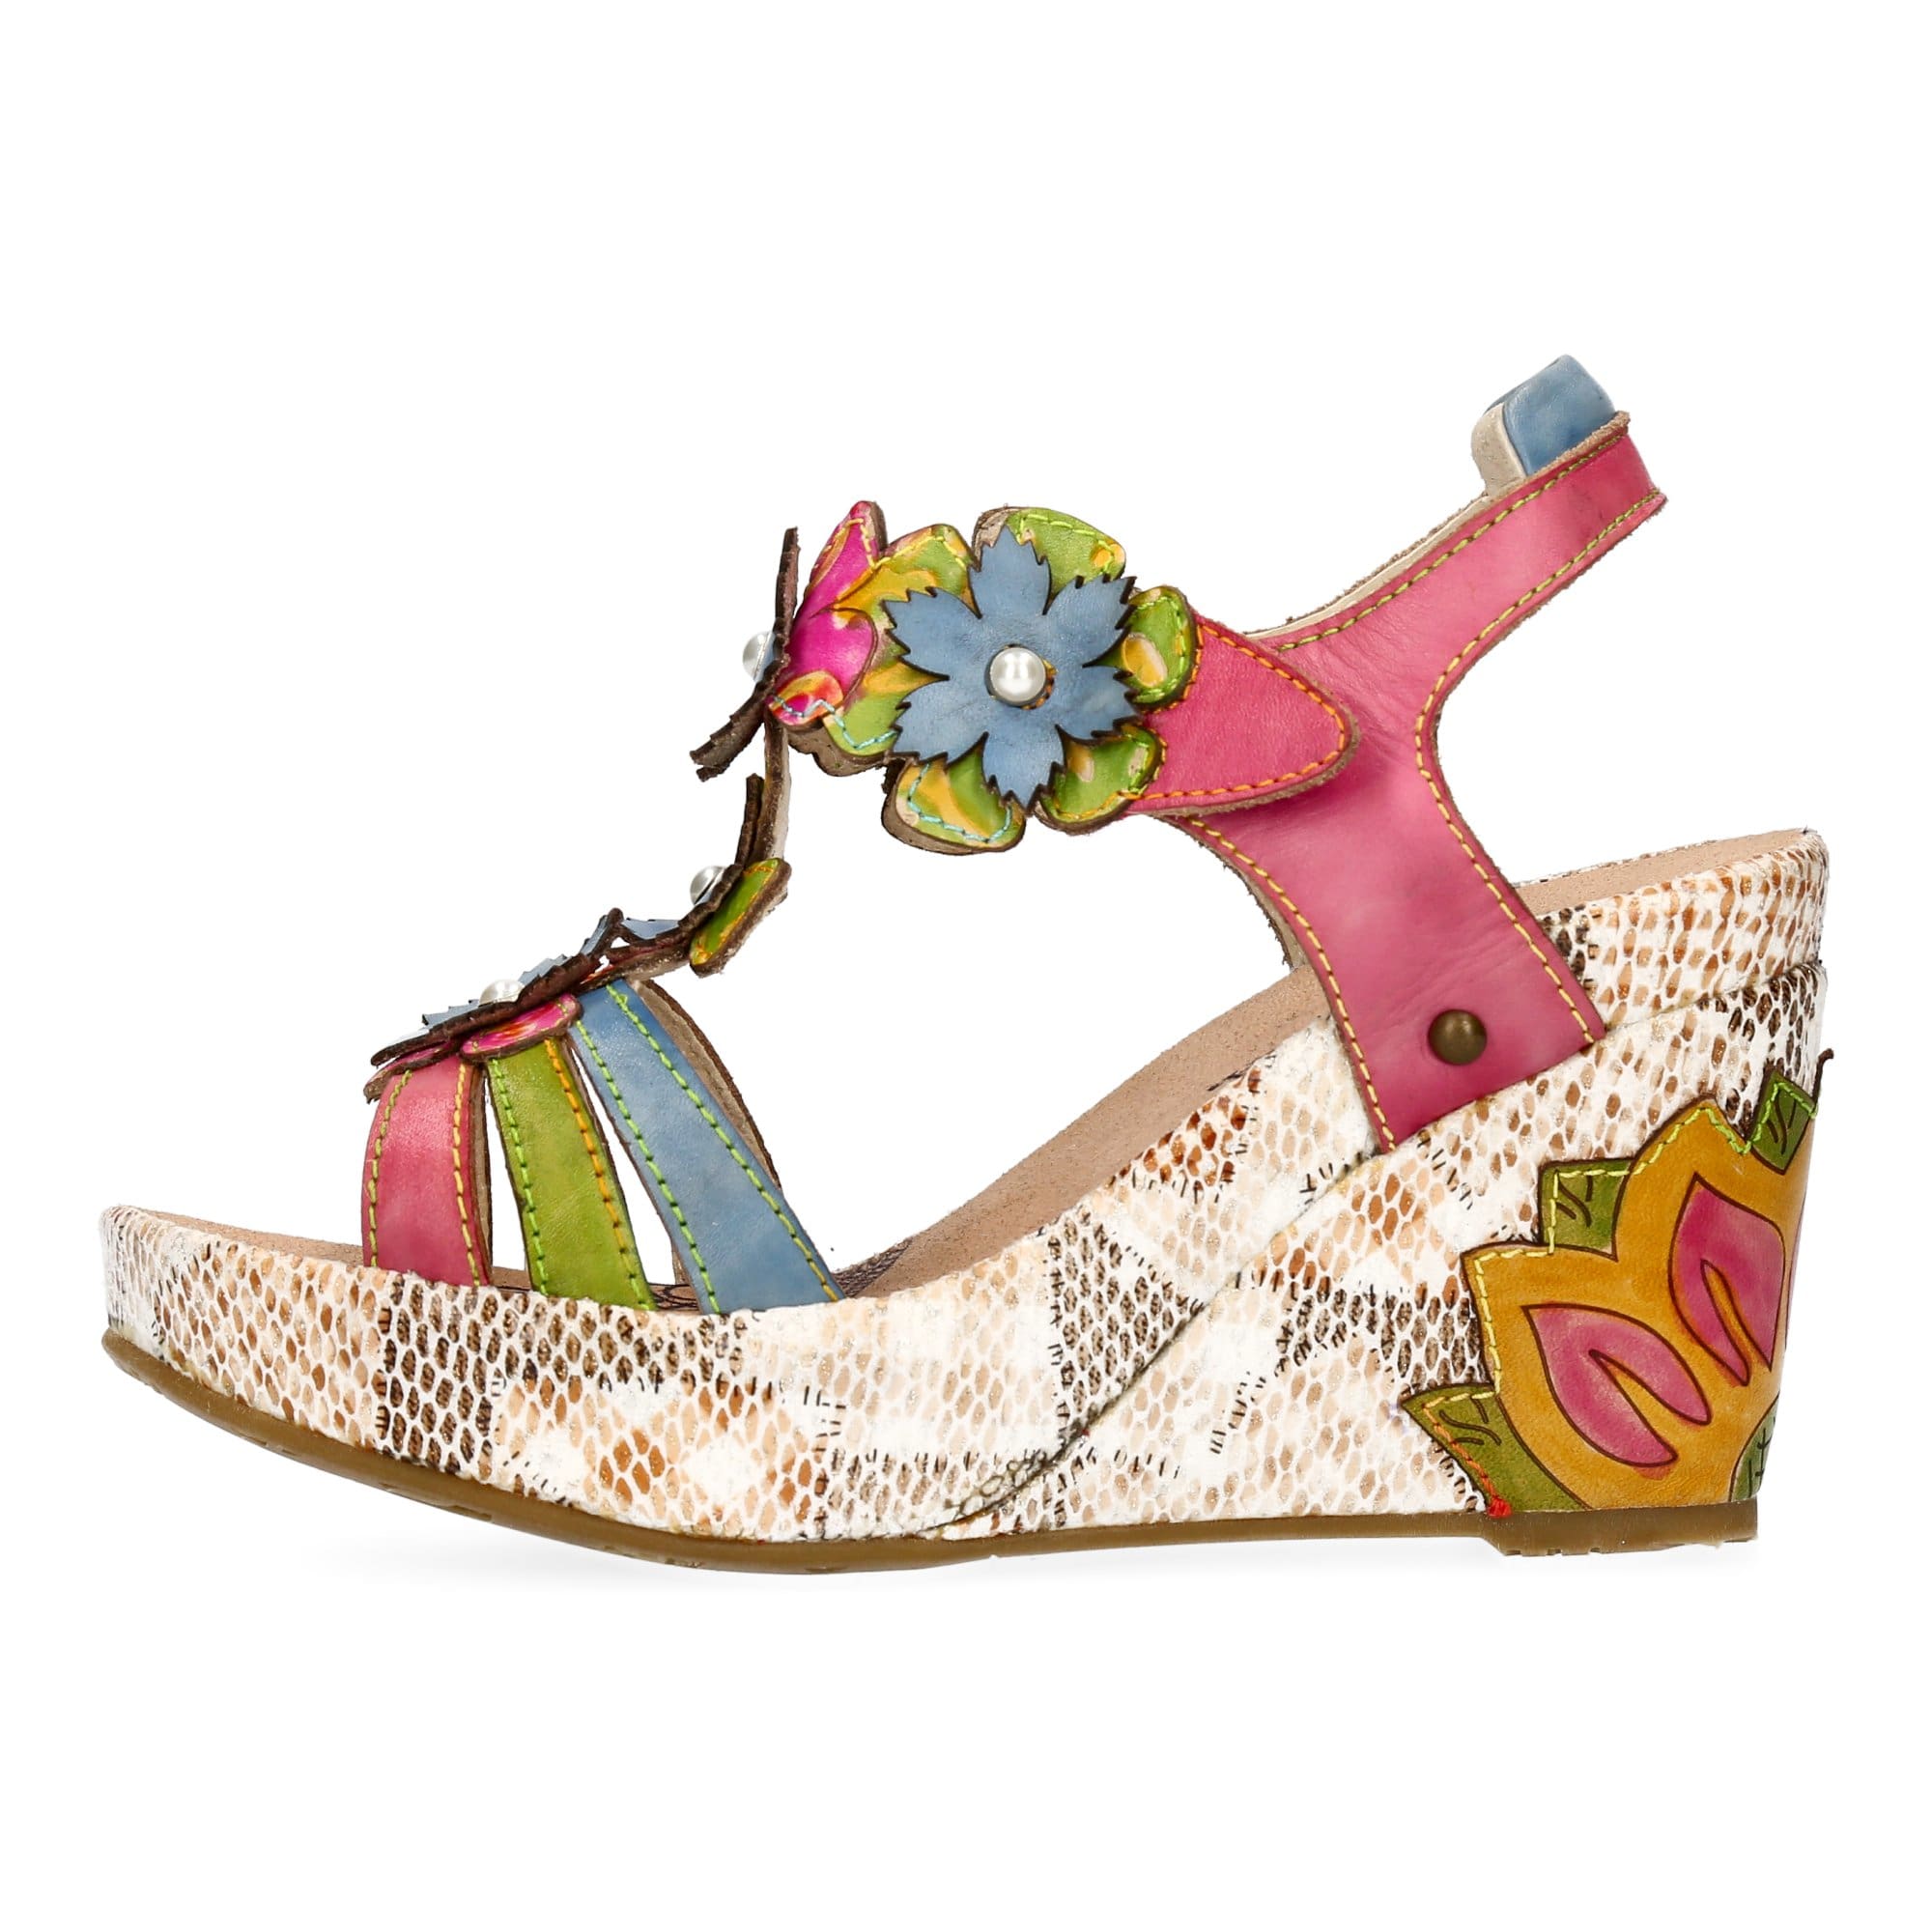 Chaussures JACSMINO 22 - 35 / Fushia - Sandale